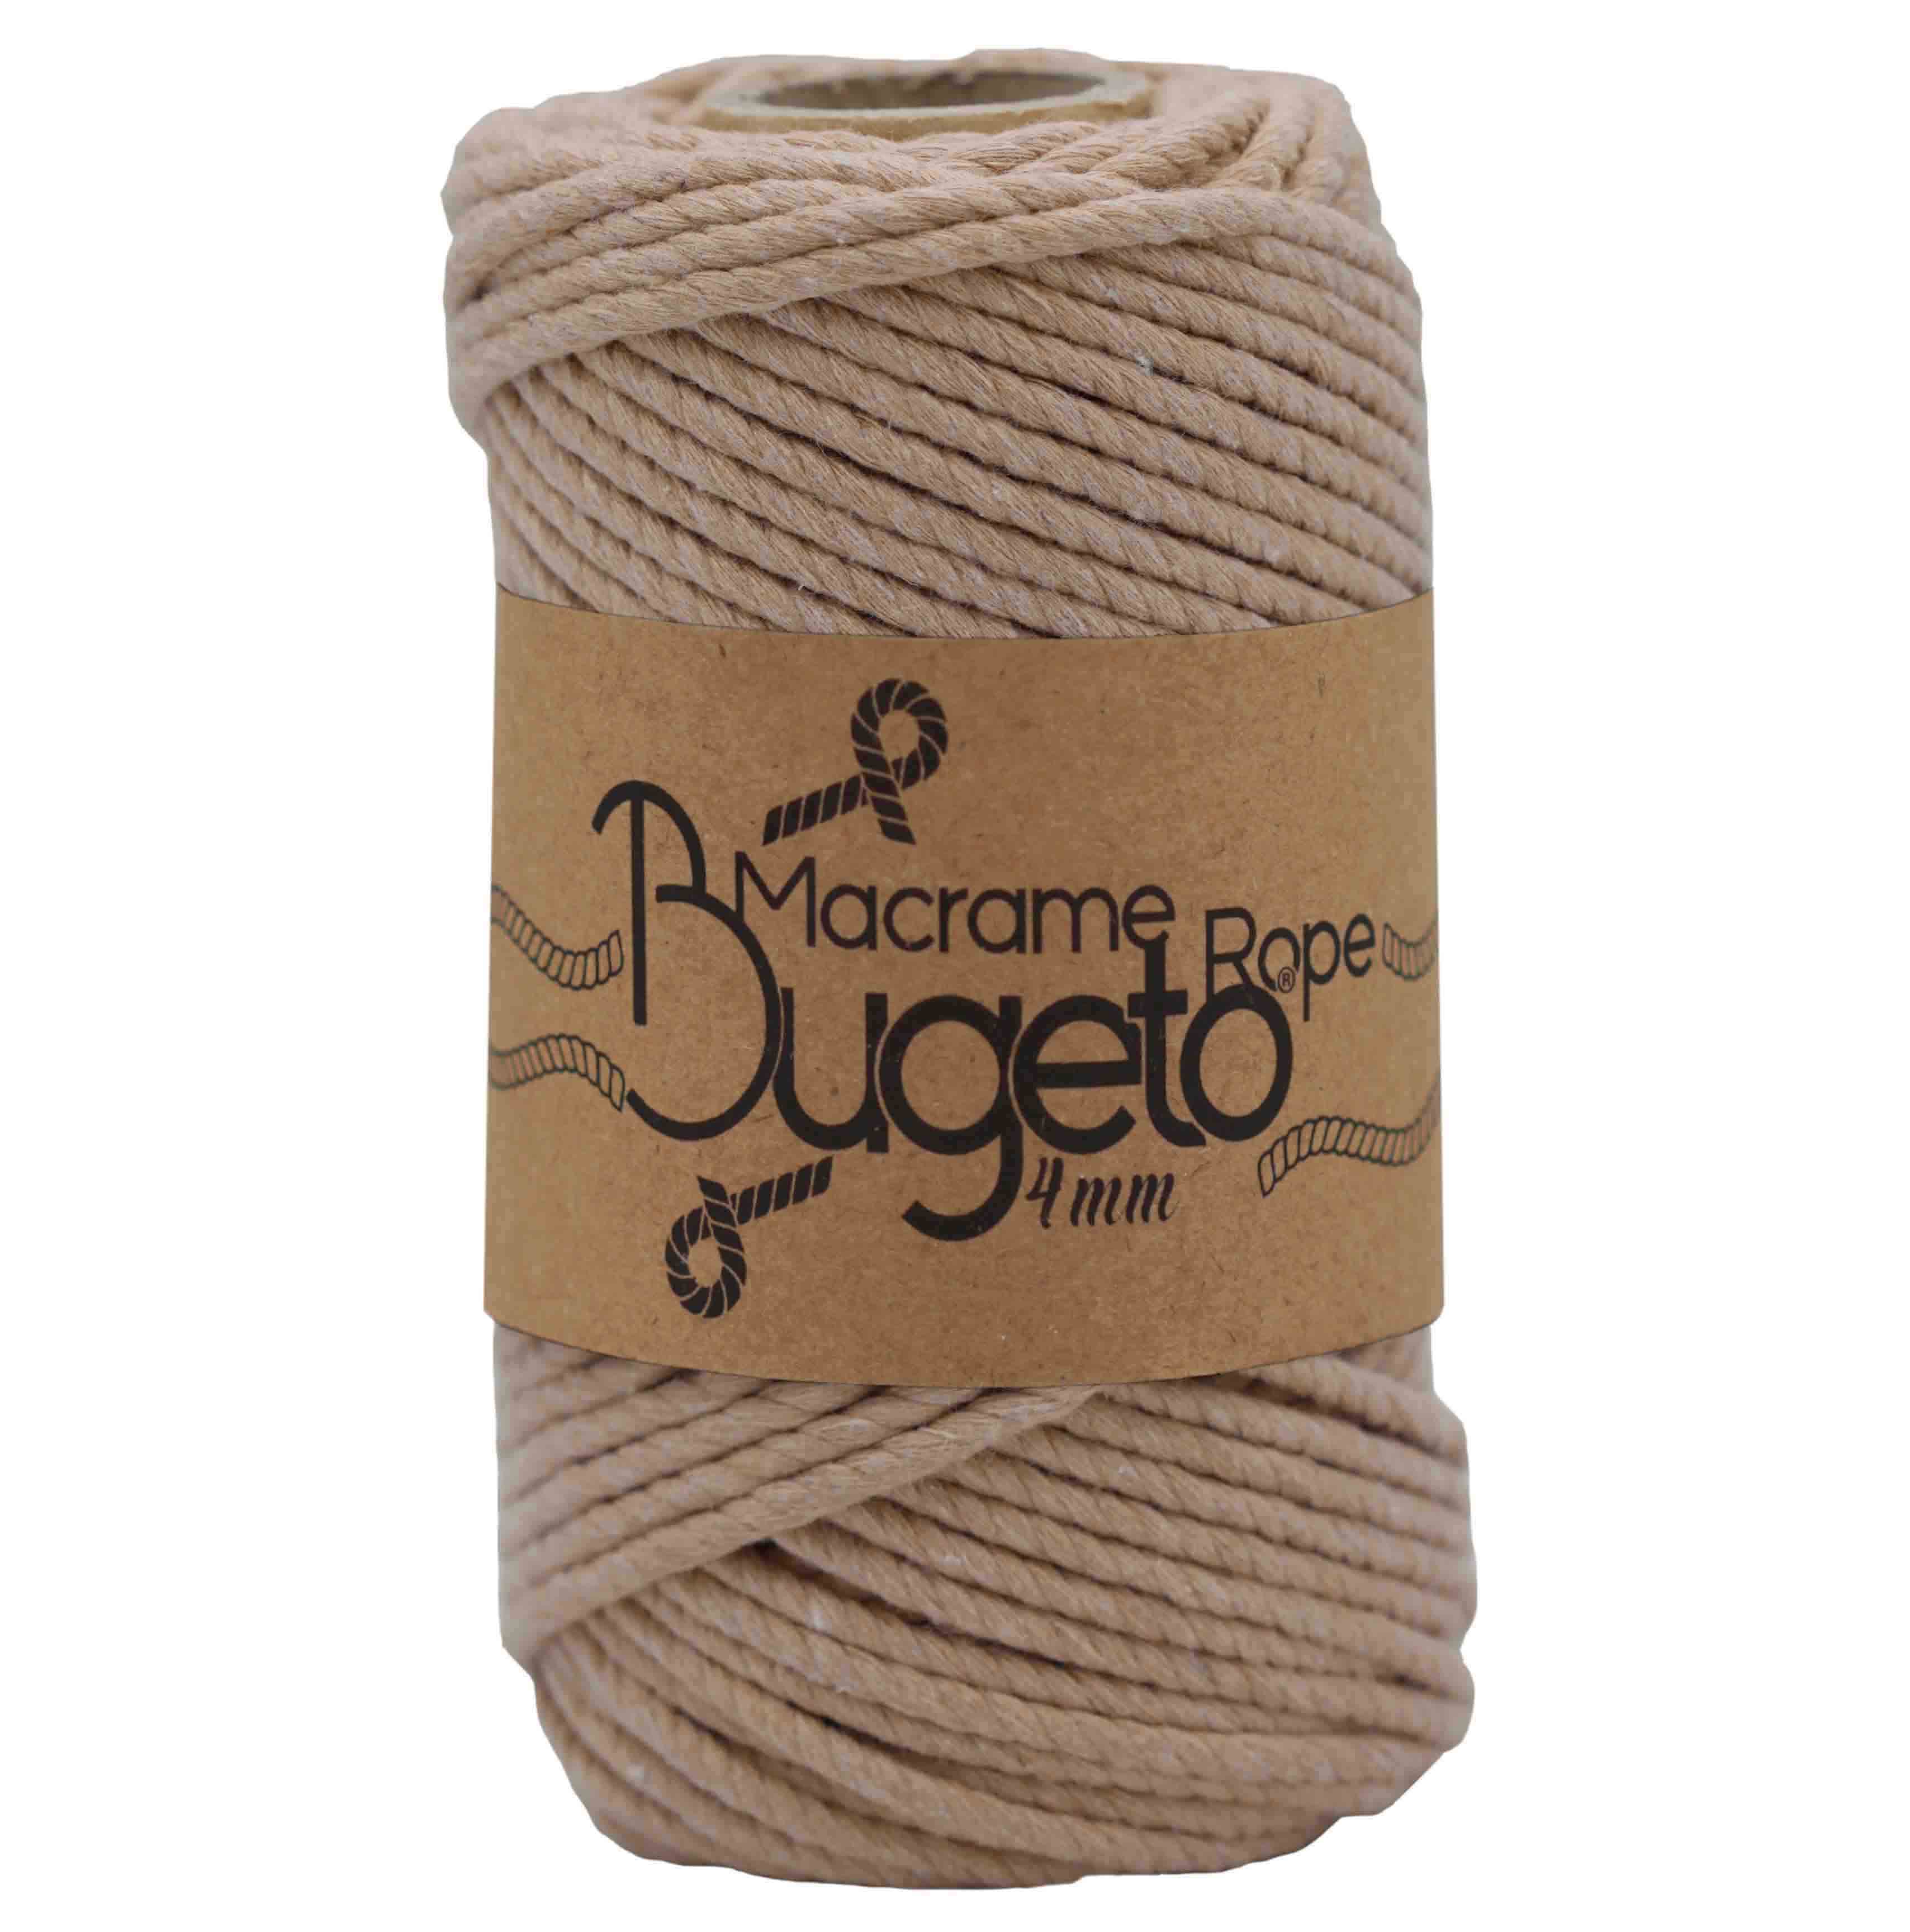 rope twist yarns cotton yarn
            recycled cotton bugeto yarn